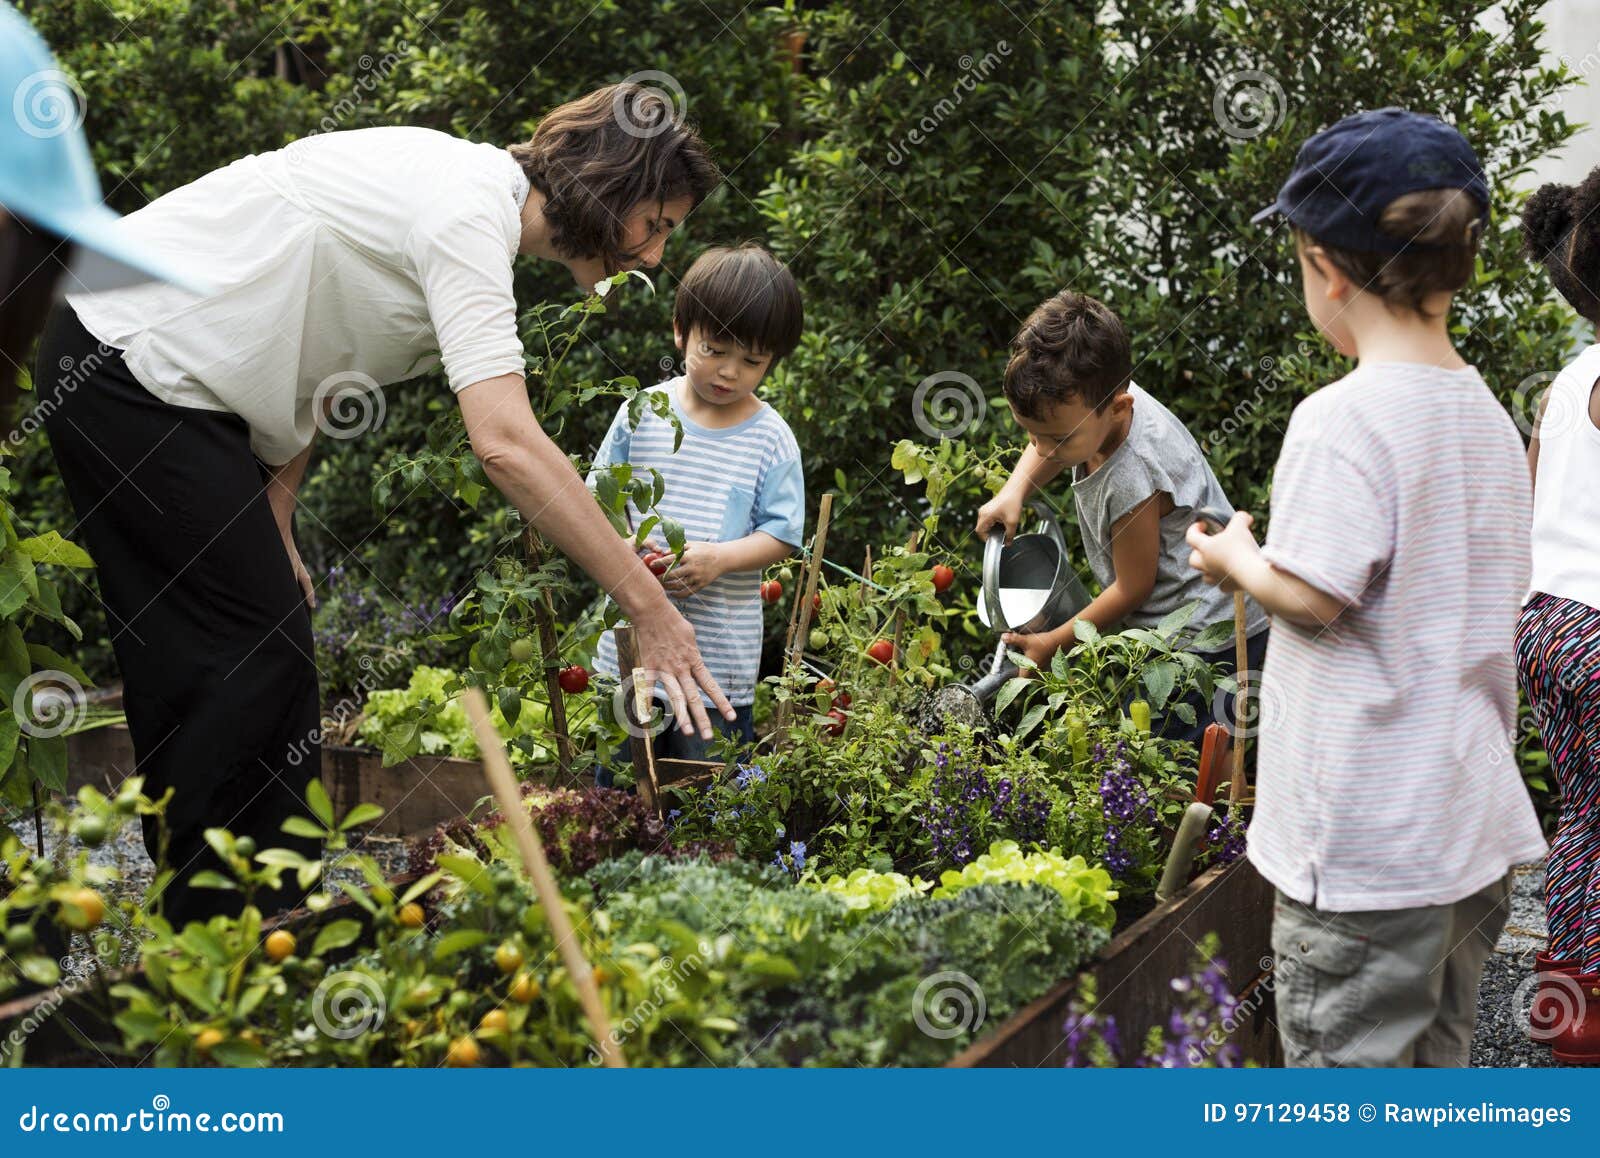 teacher and kids school learning ecology gardening